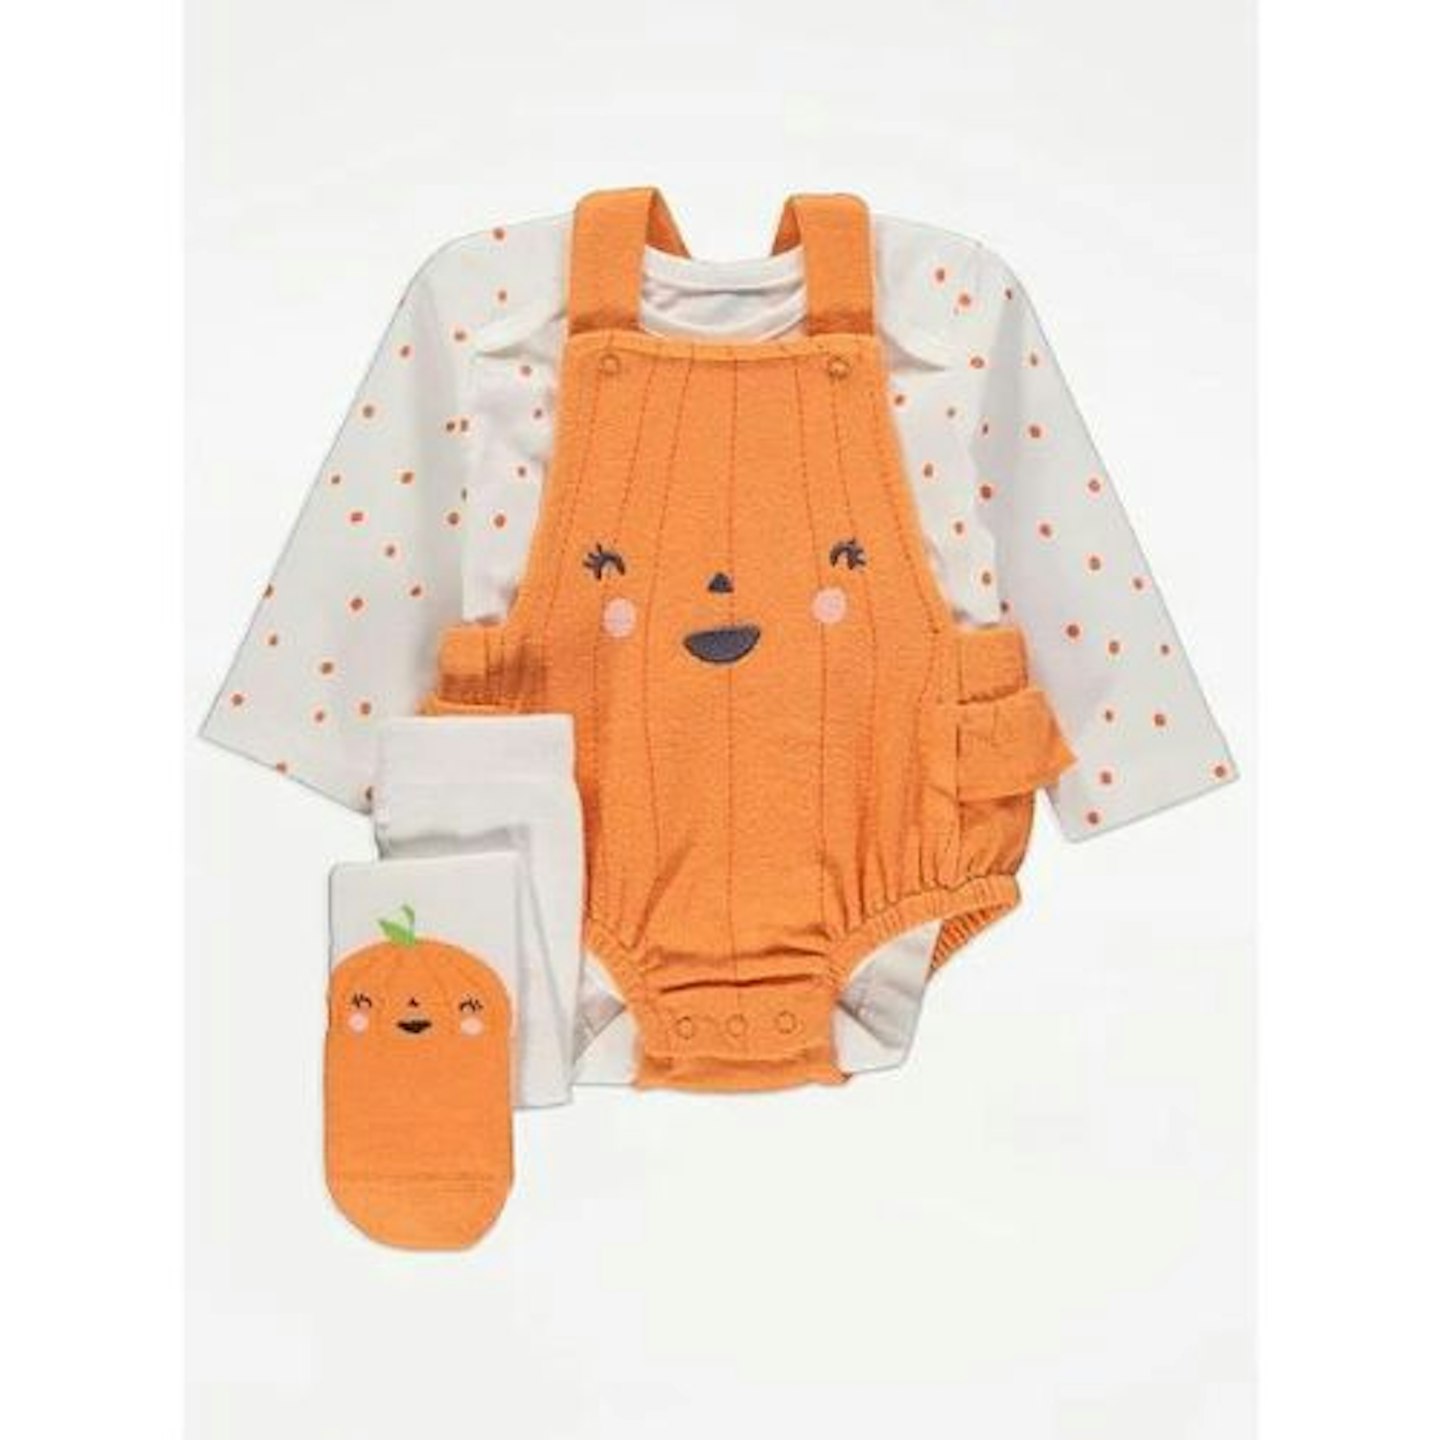 Best baby pumpkin costumes Orange Pumpkin Romper Bodysuit and Tights Outfit